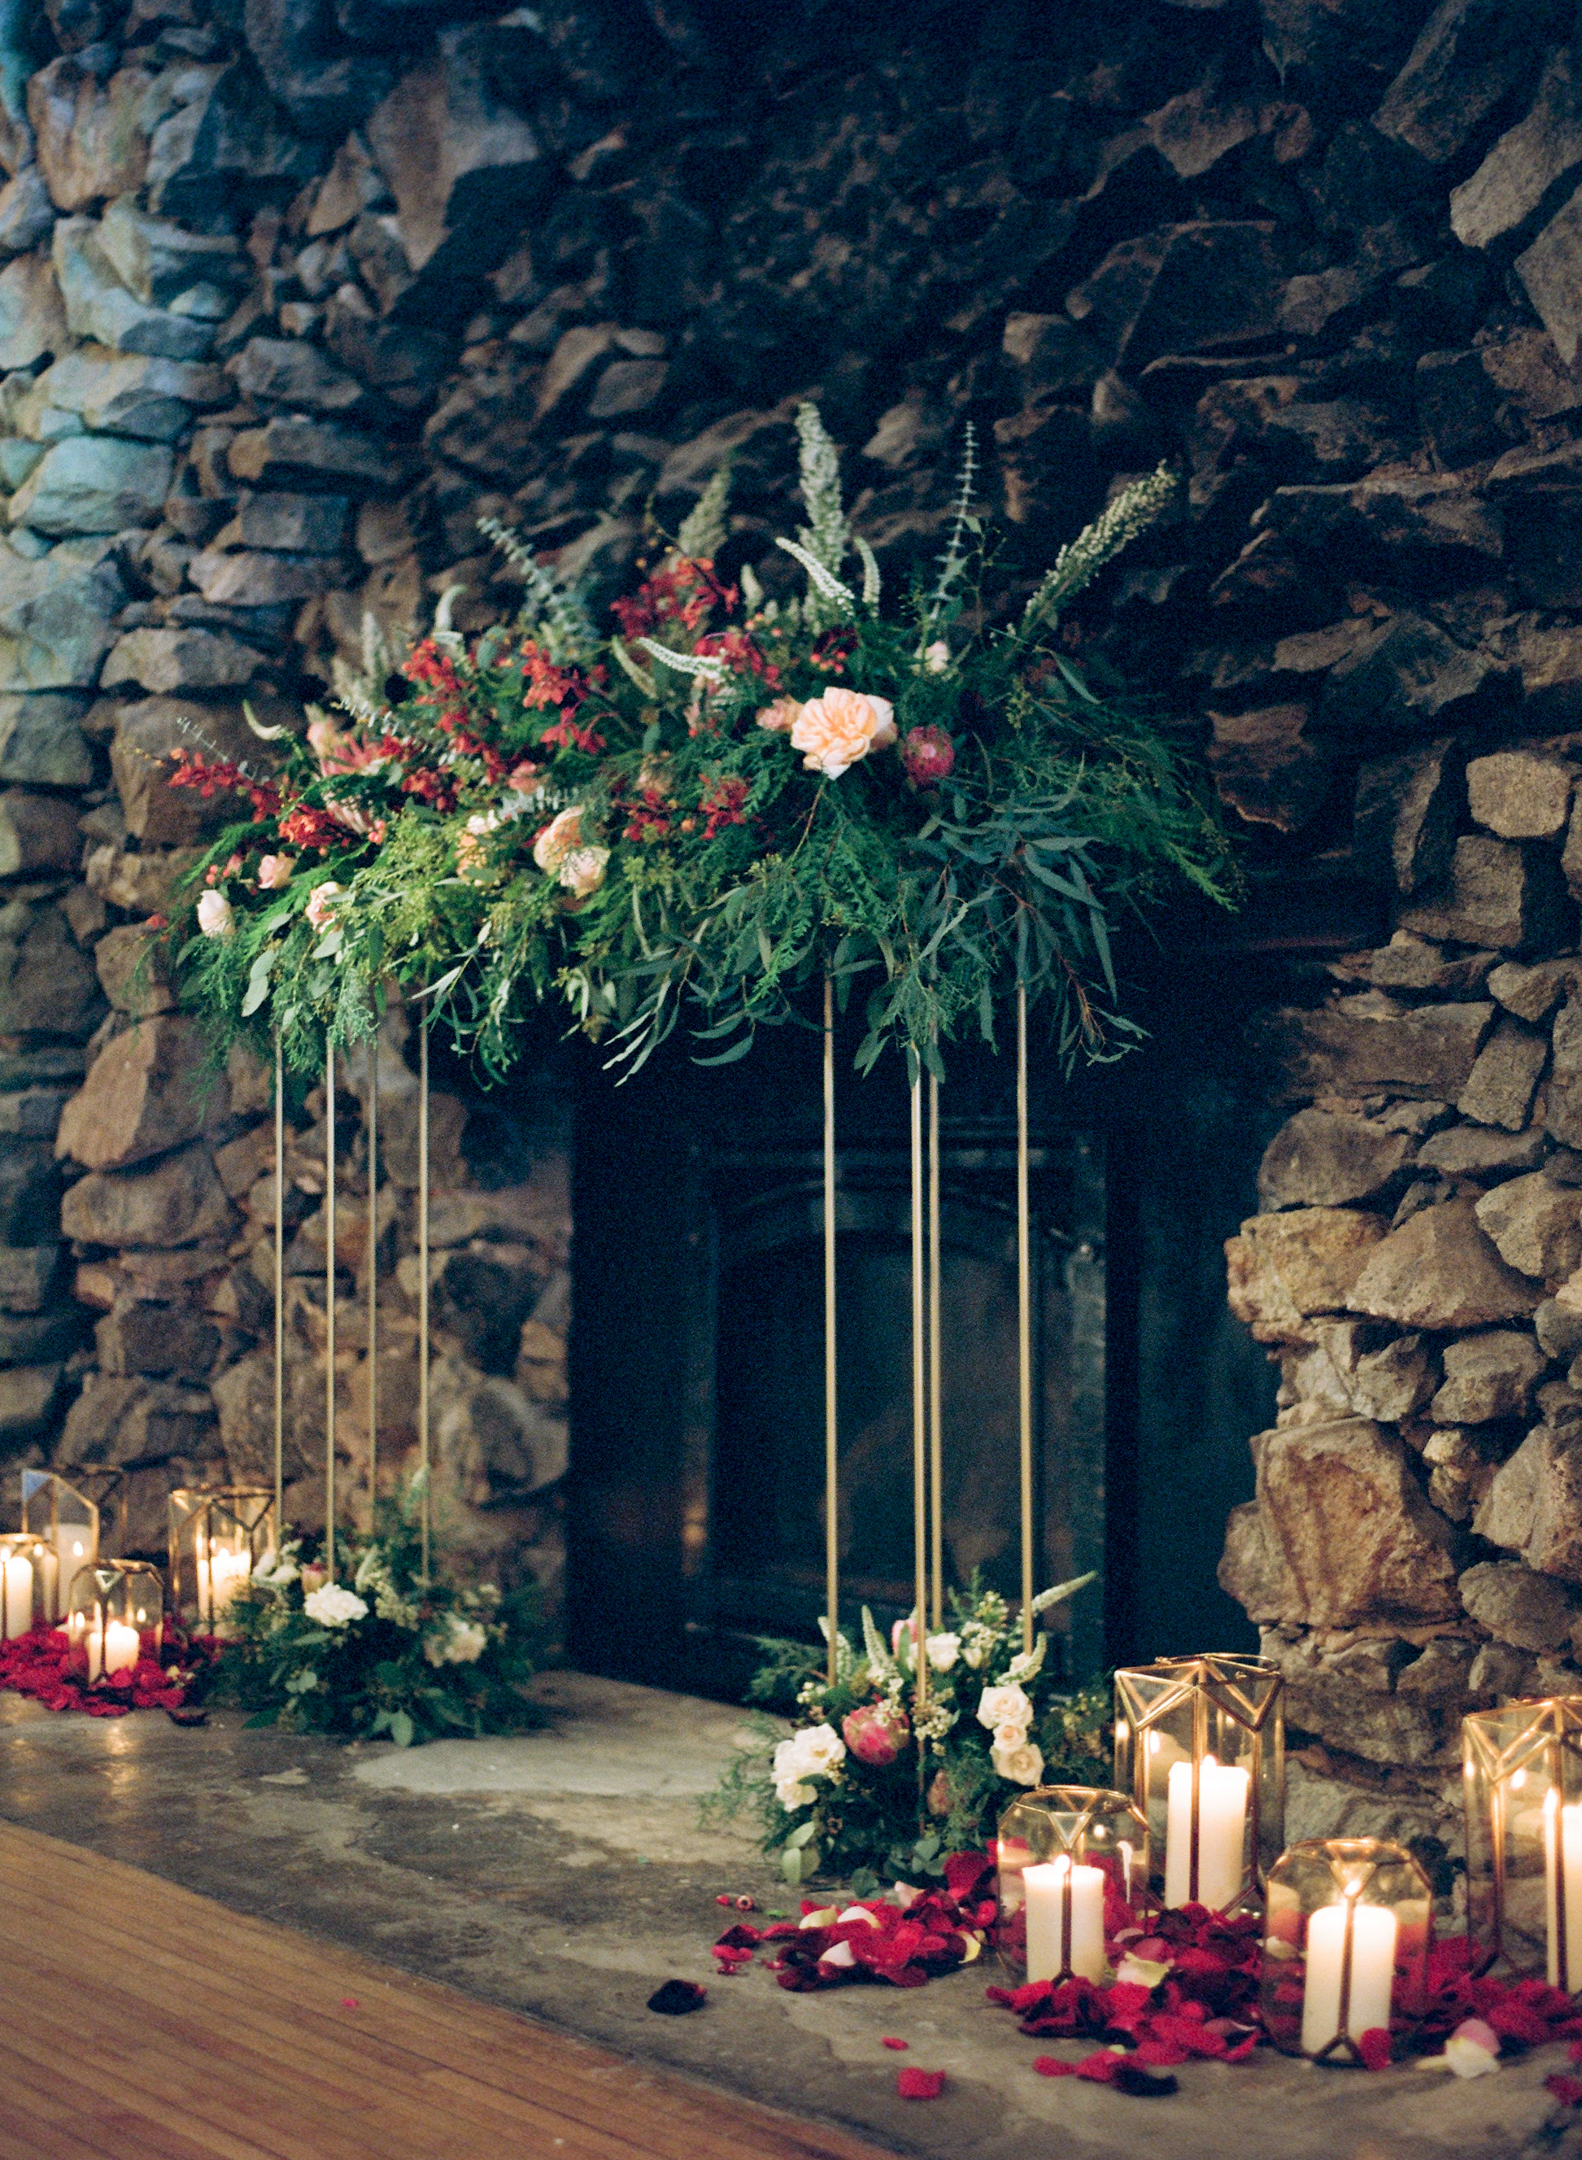 Grand fireplace floral arbor at Rothschild Pavilion winter wedding